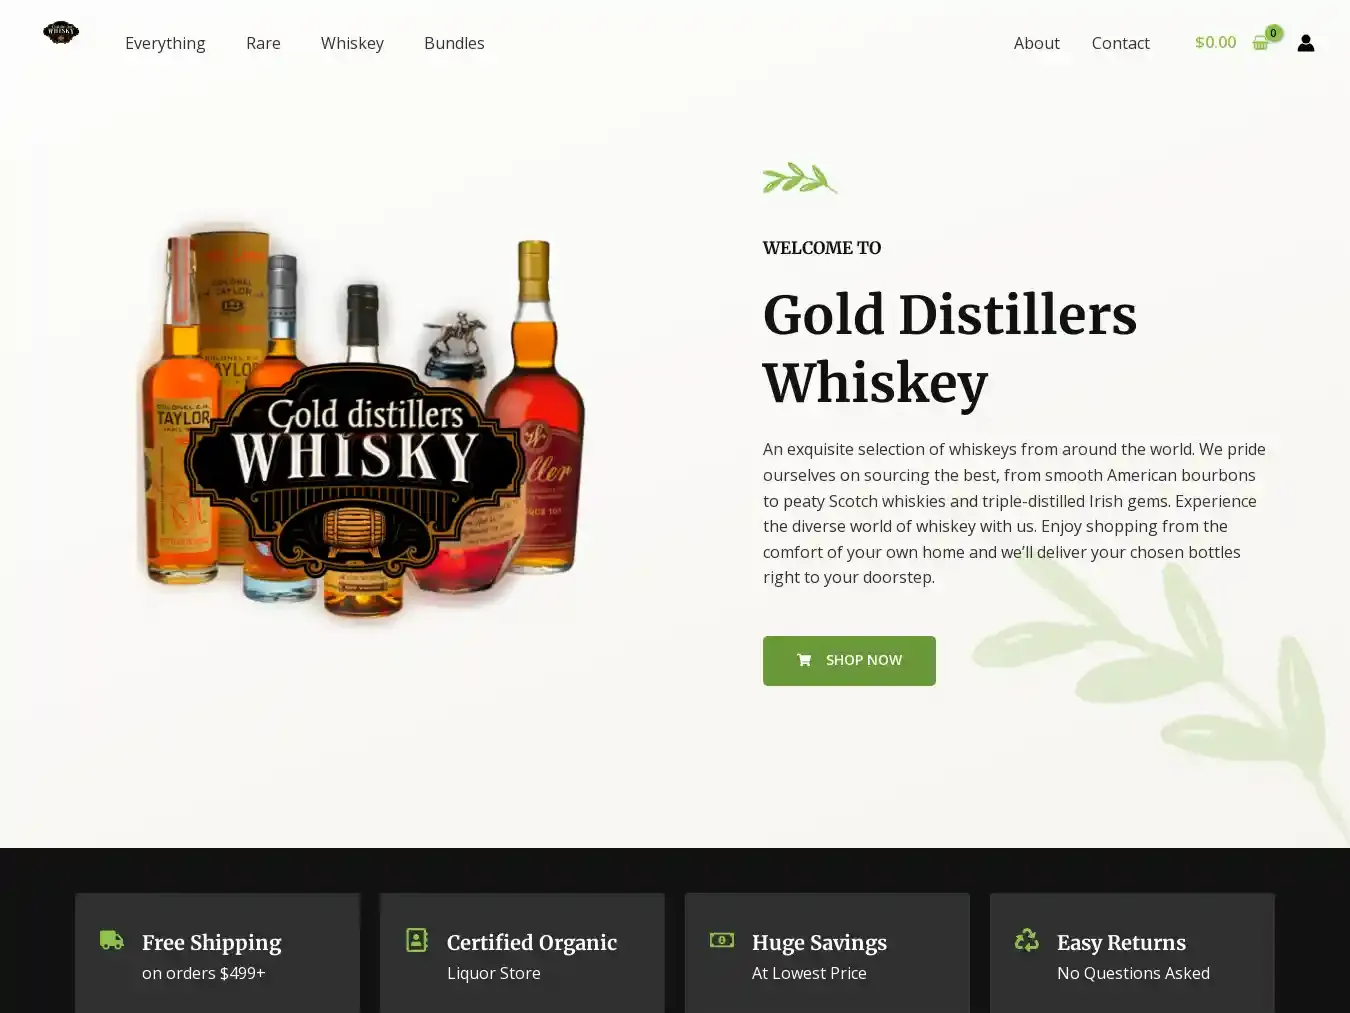 Golddistillerswhiskey.com Fraudulent Whisky website.